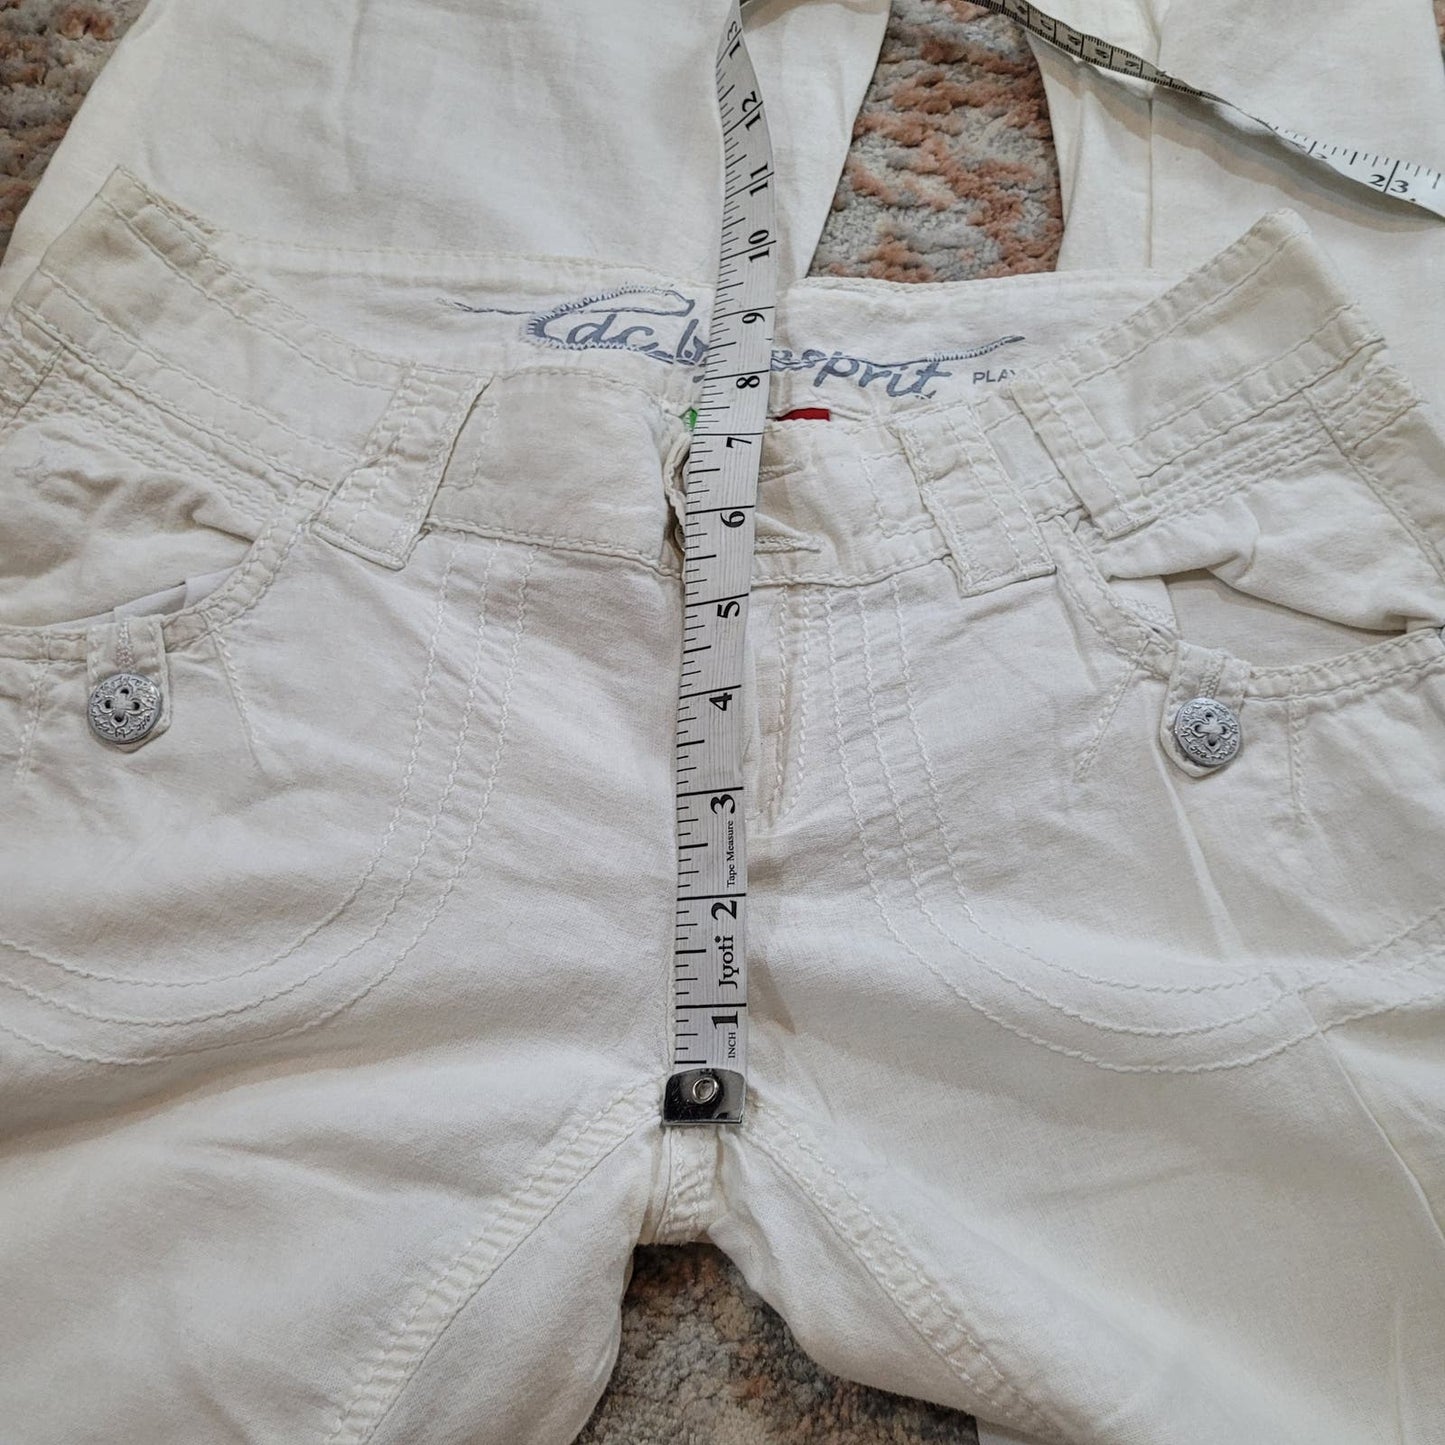 Esprit EDC Play White Flax Linen Blend Pants - Size 4